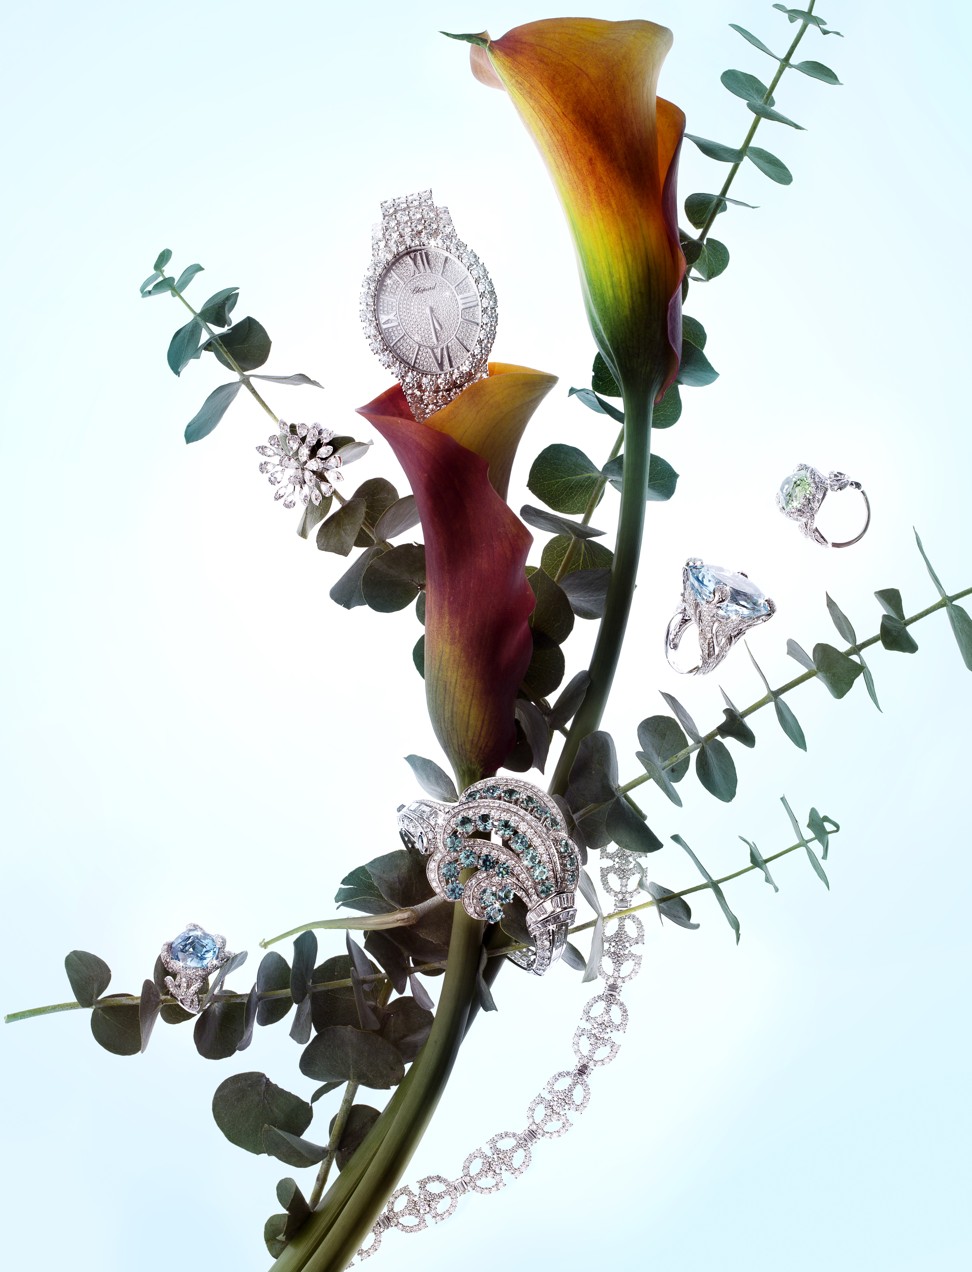 Chopard, watch; Nirav Modi, flowery ring; Tiffany & Co, bracelet tourmaline cuff; Dior Joiallerie, Blue Paraiba tourmaline ring, aquamarine ring, and yellow-green tourmaline ring; Harry Winston, bracelet